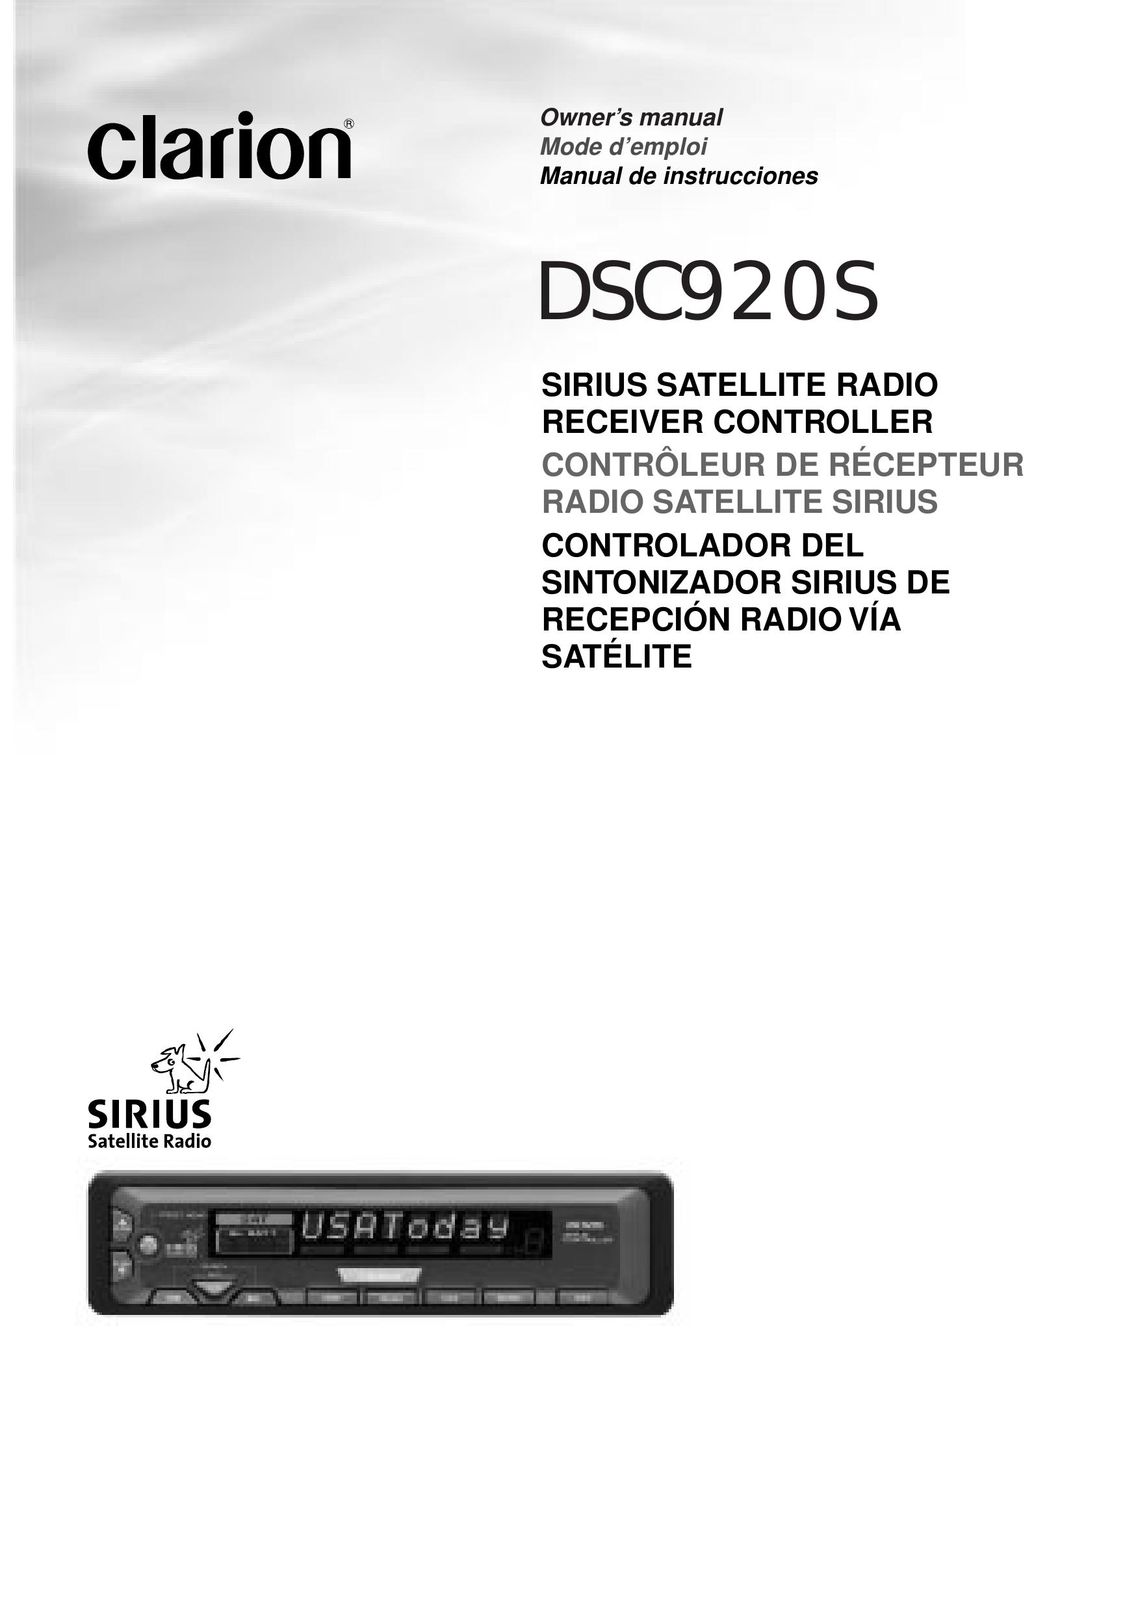 Clarion DSC920S Car Satellite Radio System User Manual